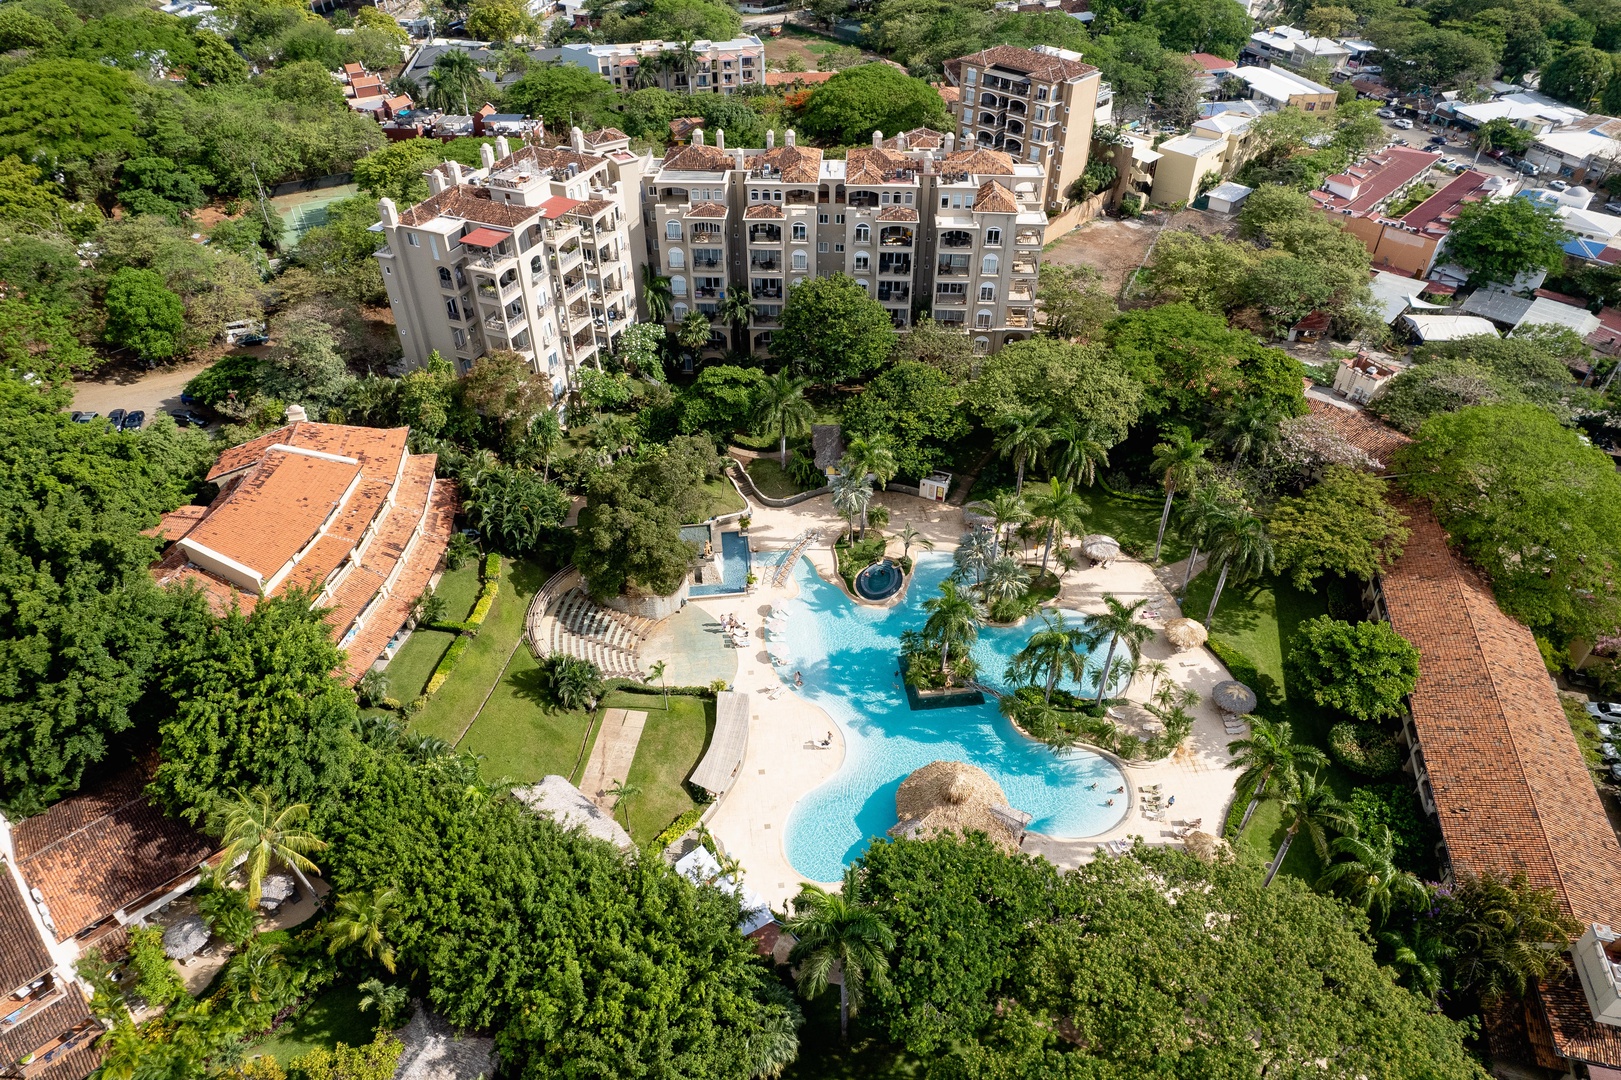 Casa La Diria #303, Balcony and Lagoon Pool View, Walk to Beach!